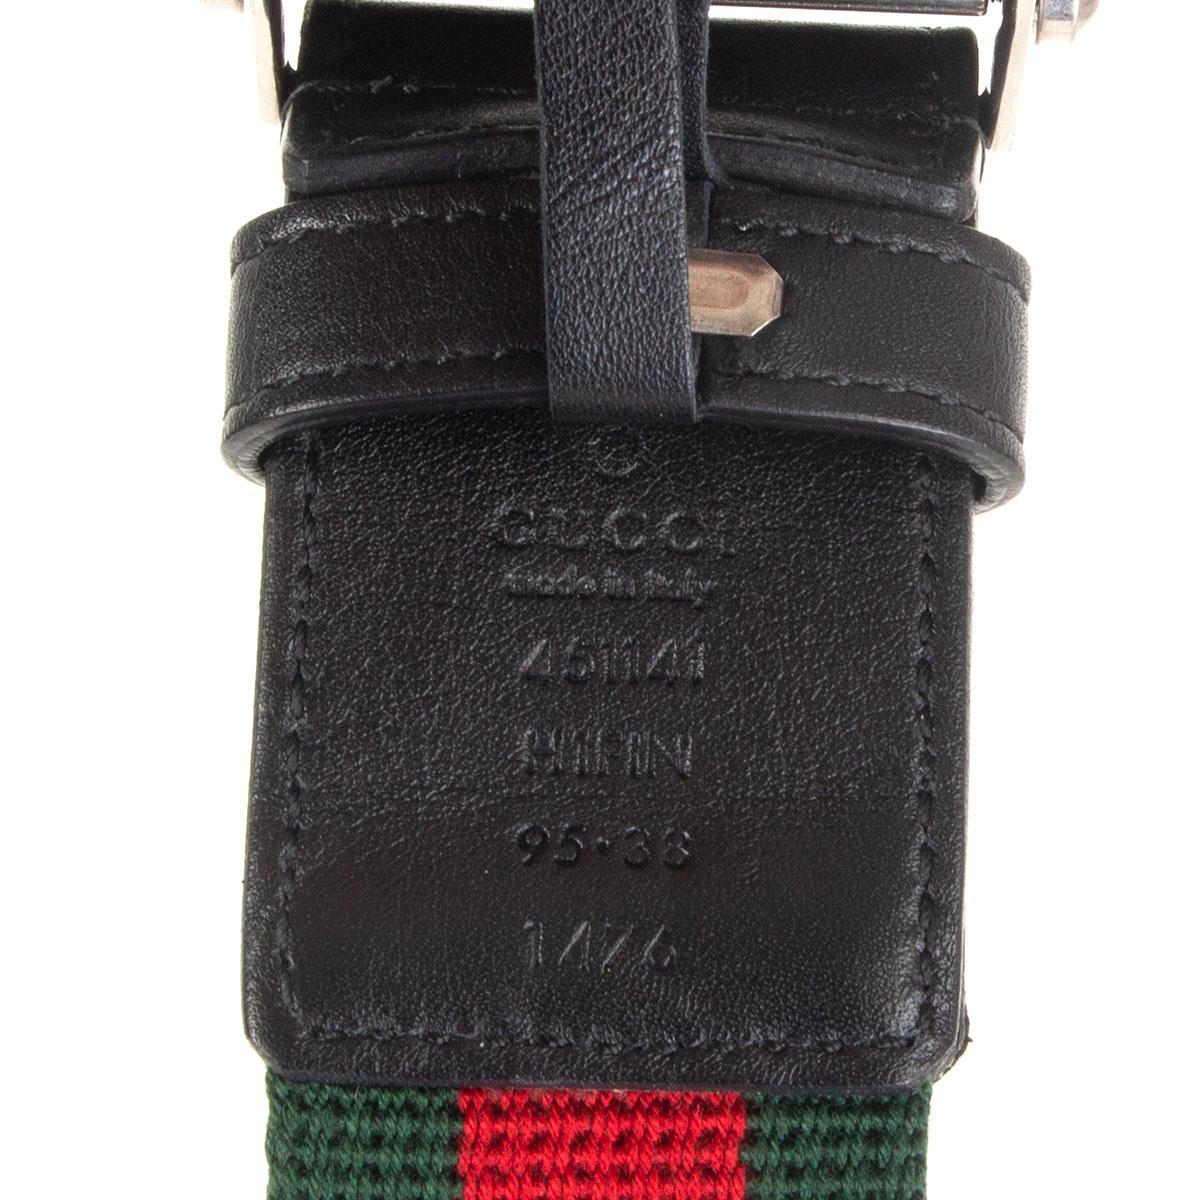 Black GUCCI red green WEB STRIPE Belt with Plaque Buckle L'AVEUGLE PAR AMOUR 95